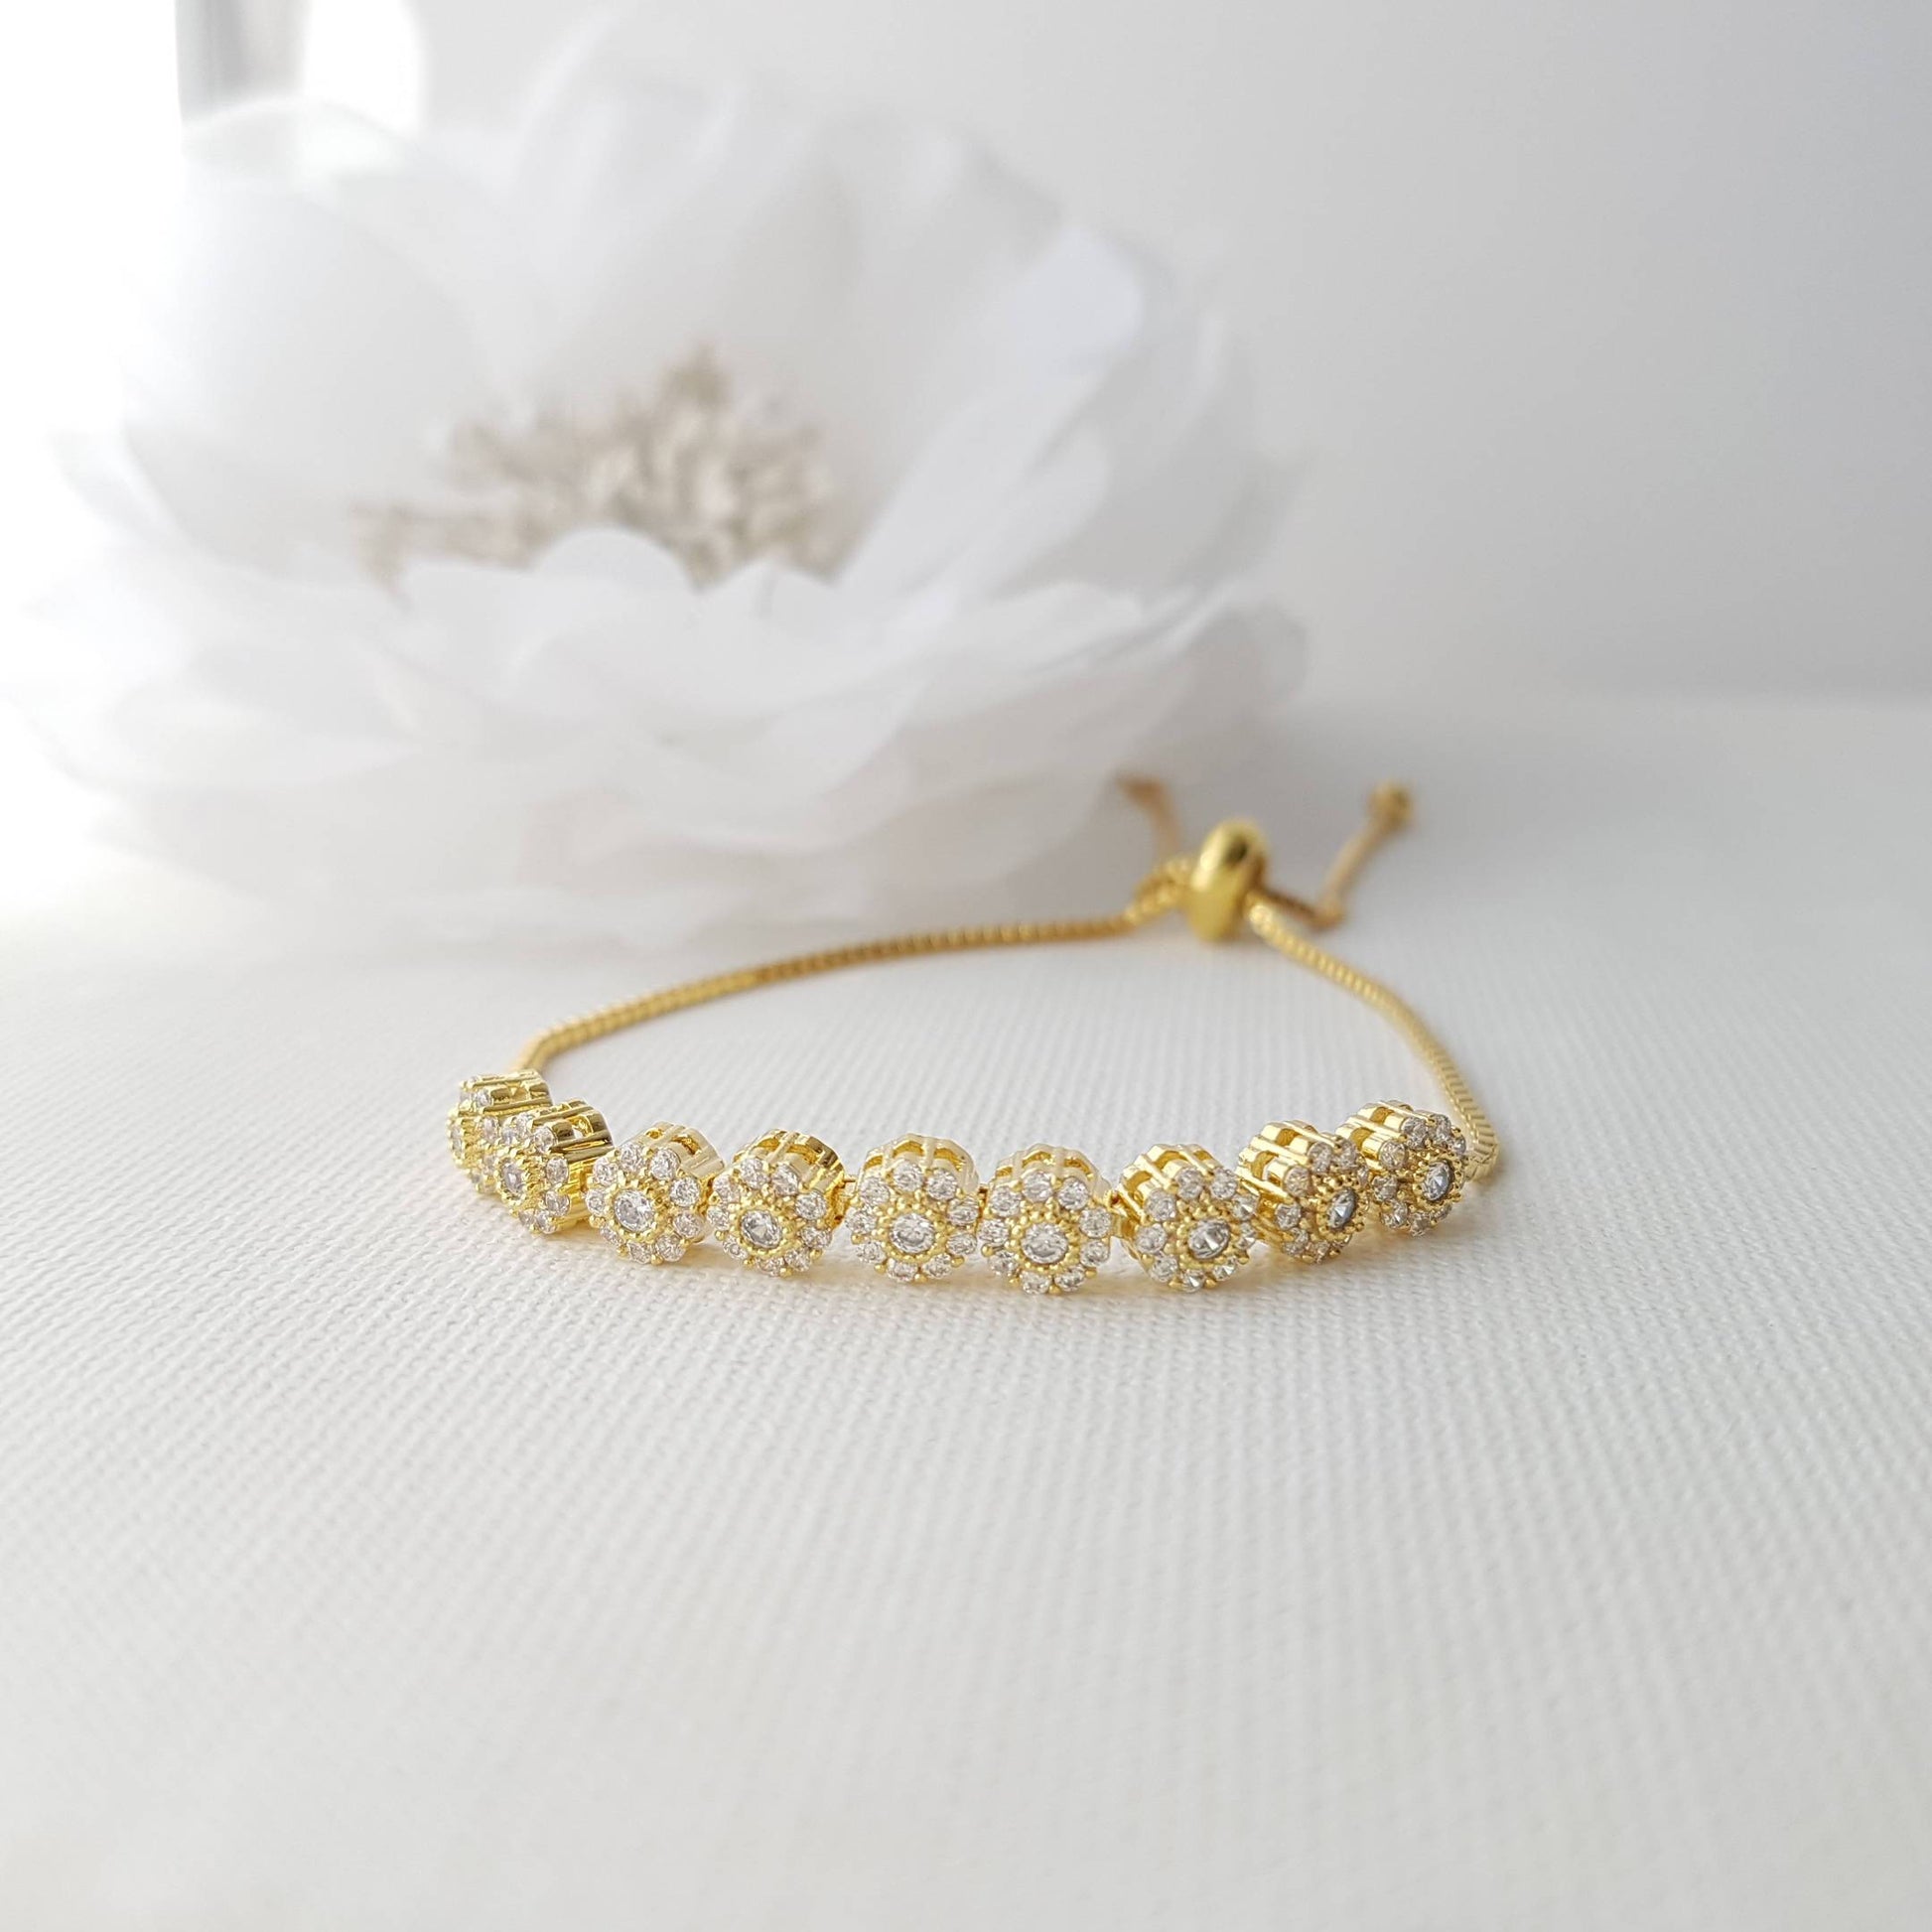 Bridal Bracelet, Wedding Jewelry, Rose Gold, Gold, Bangle Bracelet, Halo Style, Wedding Bracelet, Adjustable Bracelet, Reagan Bracelet - PoetryDesigns